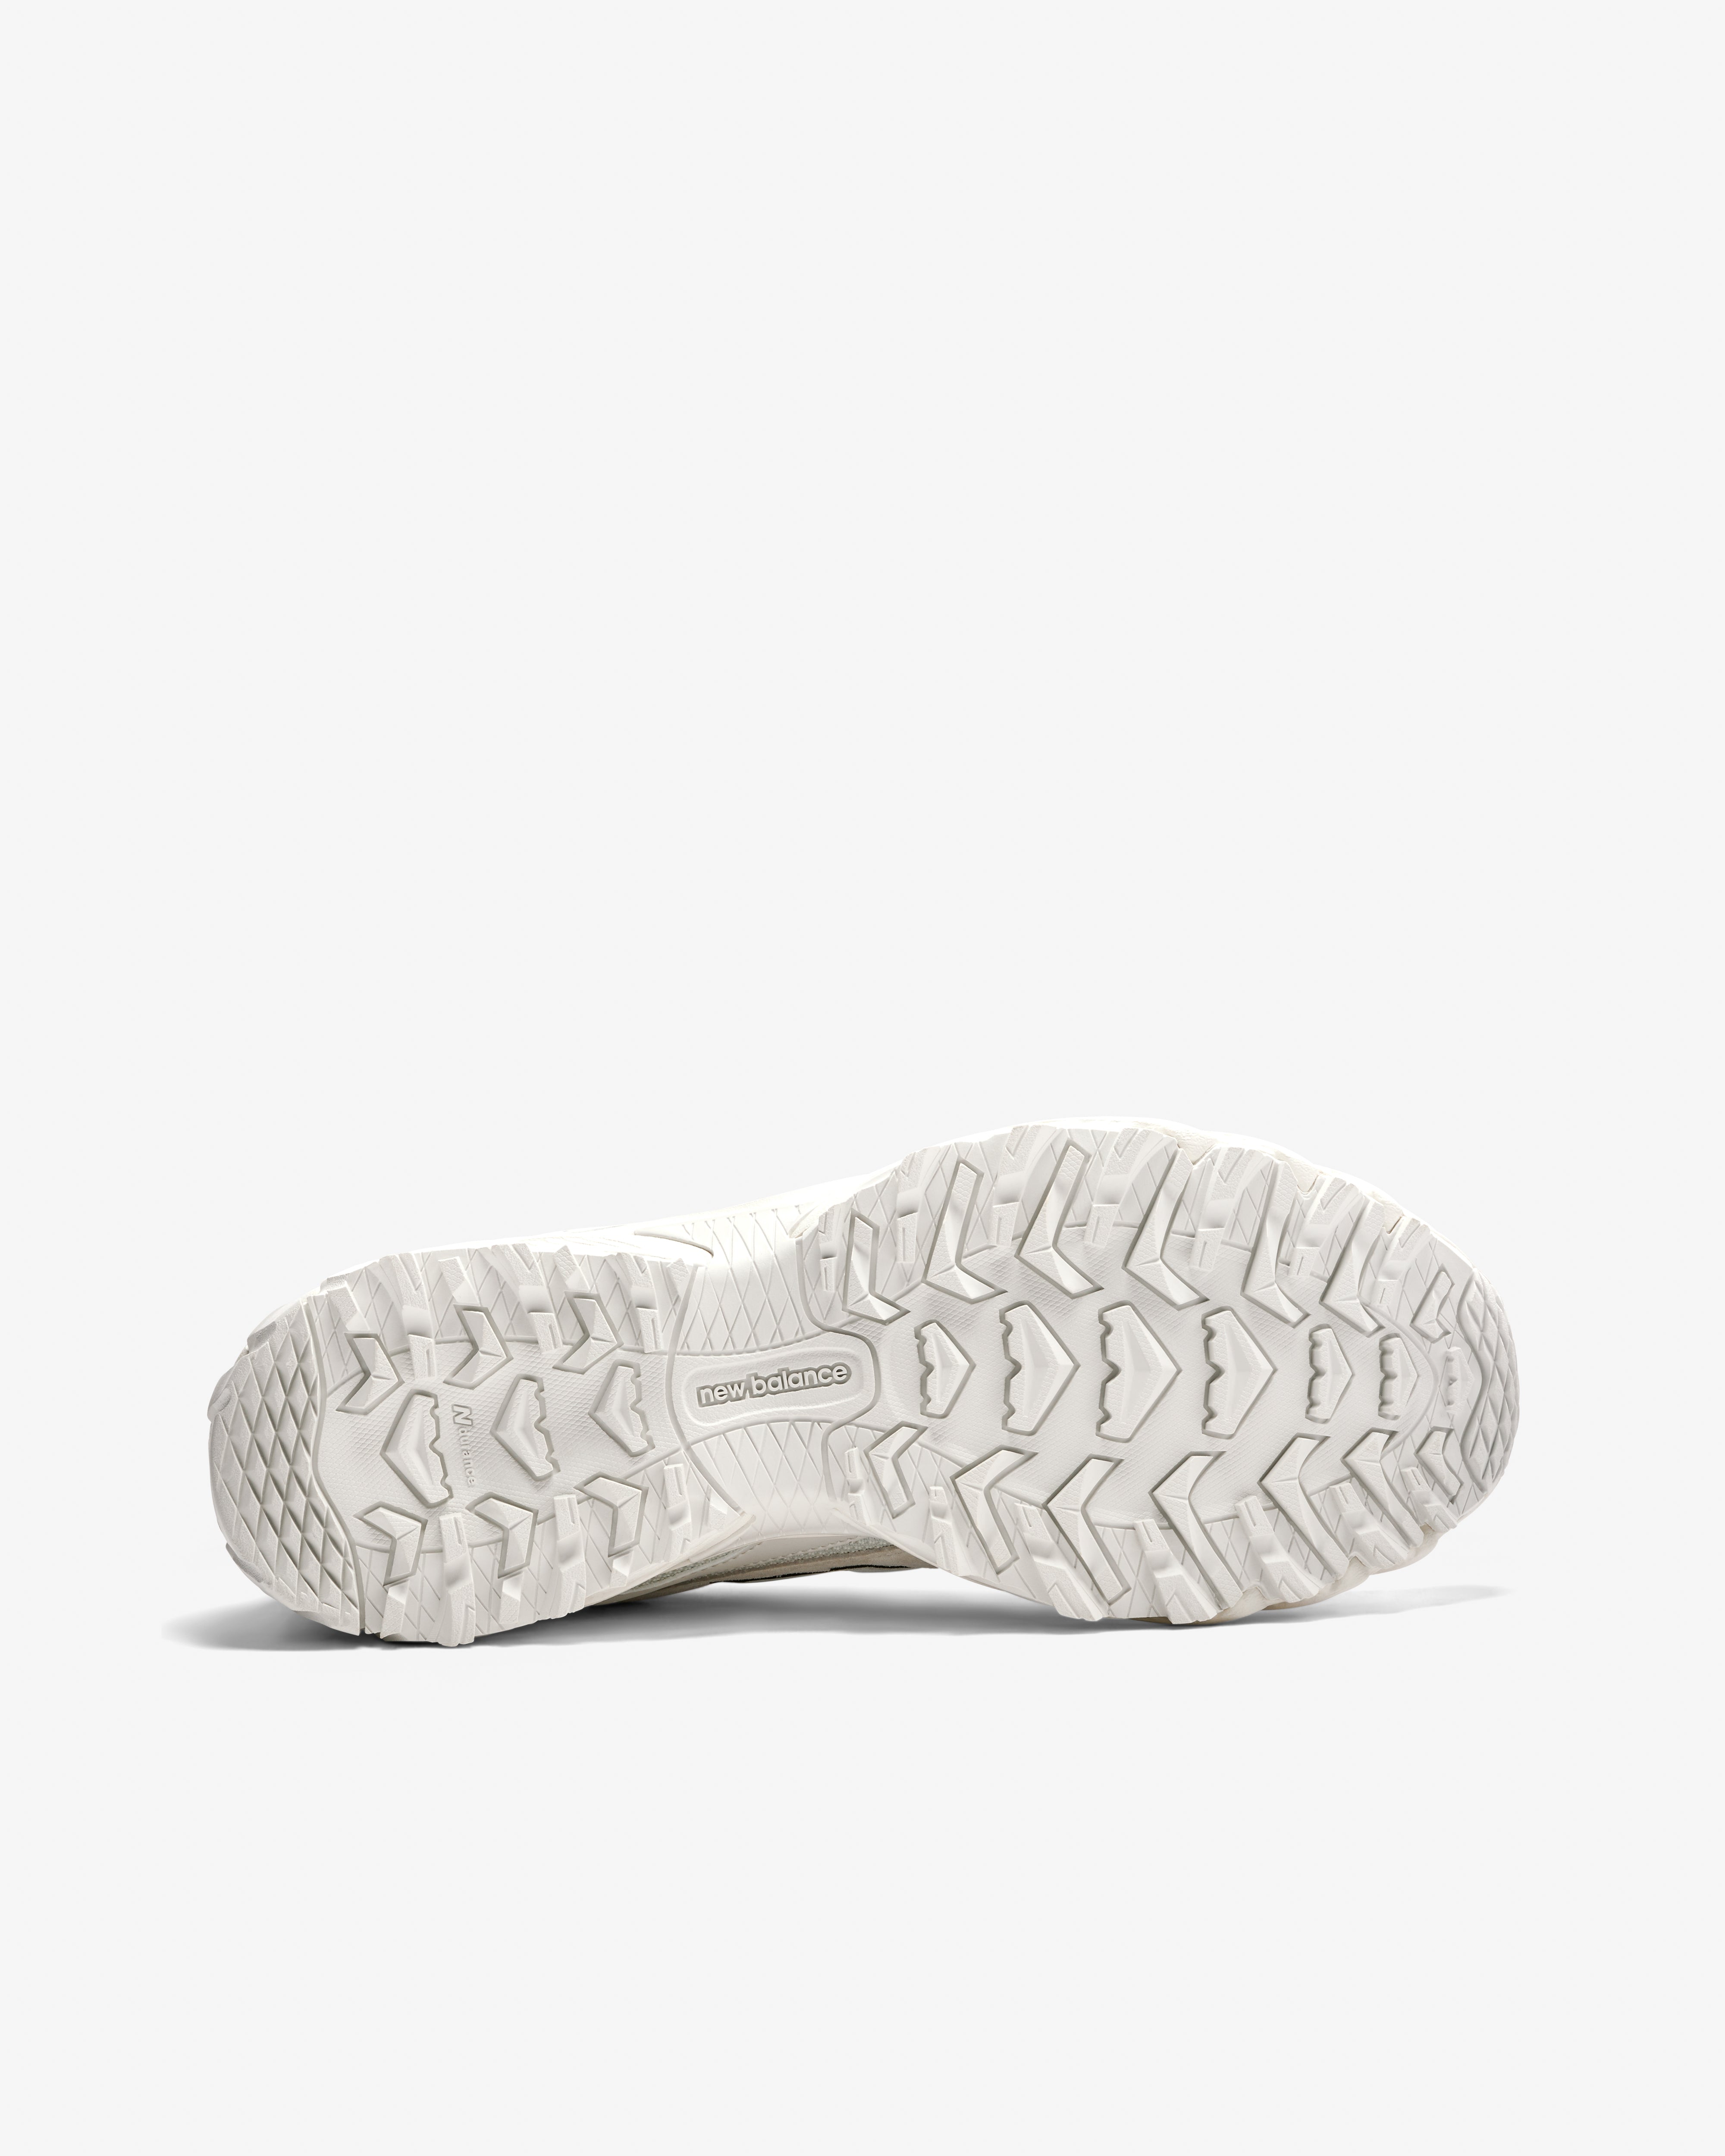 Comme des Garçons Homme - New Balance ML610TCG Sneakers - (White)